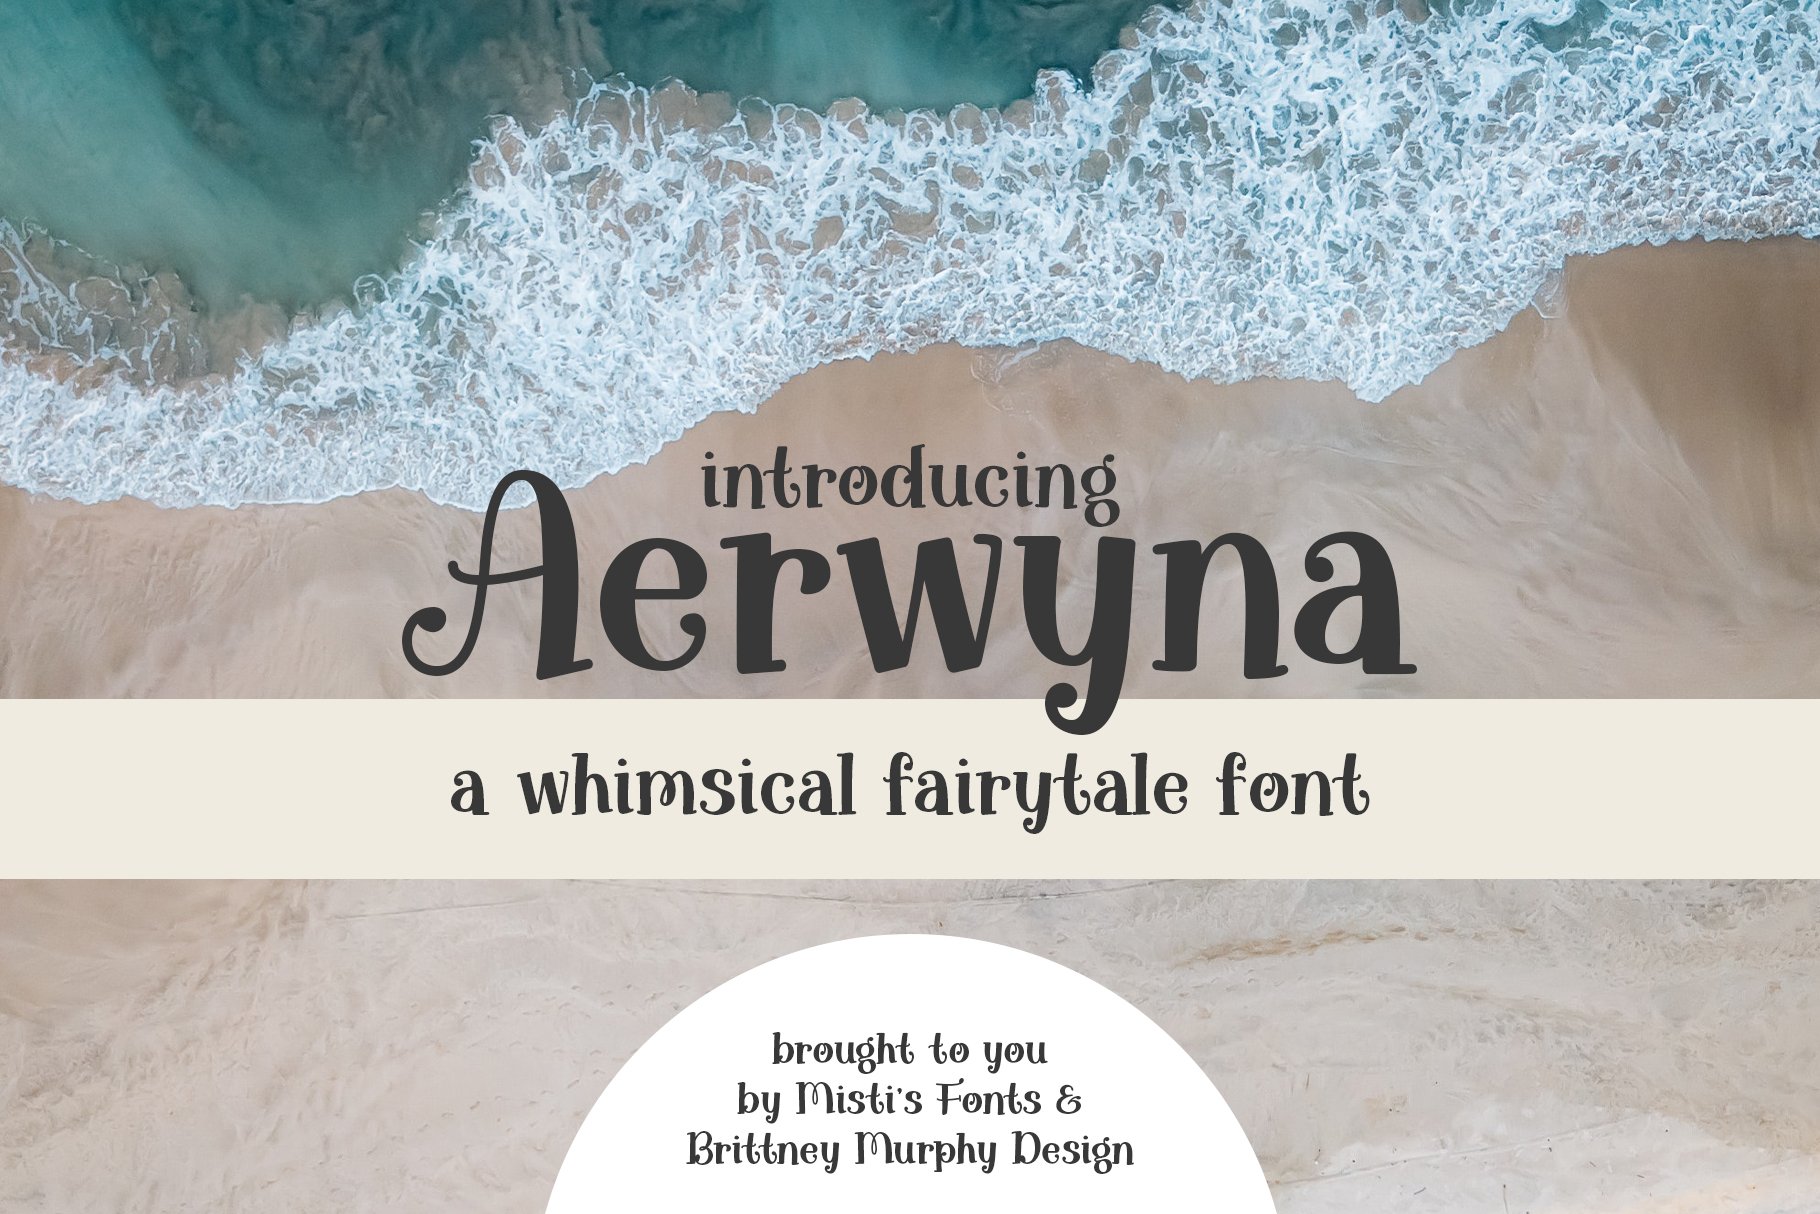 Aerwyna cover image.